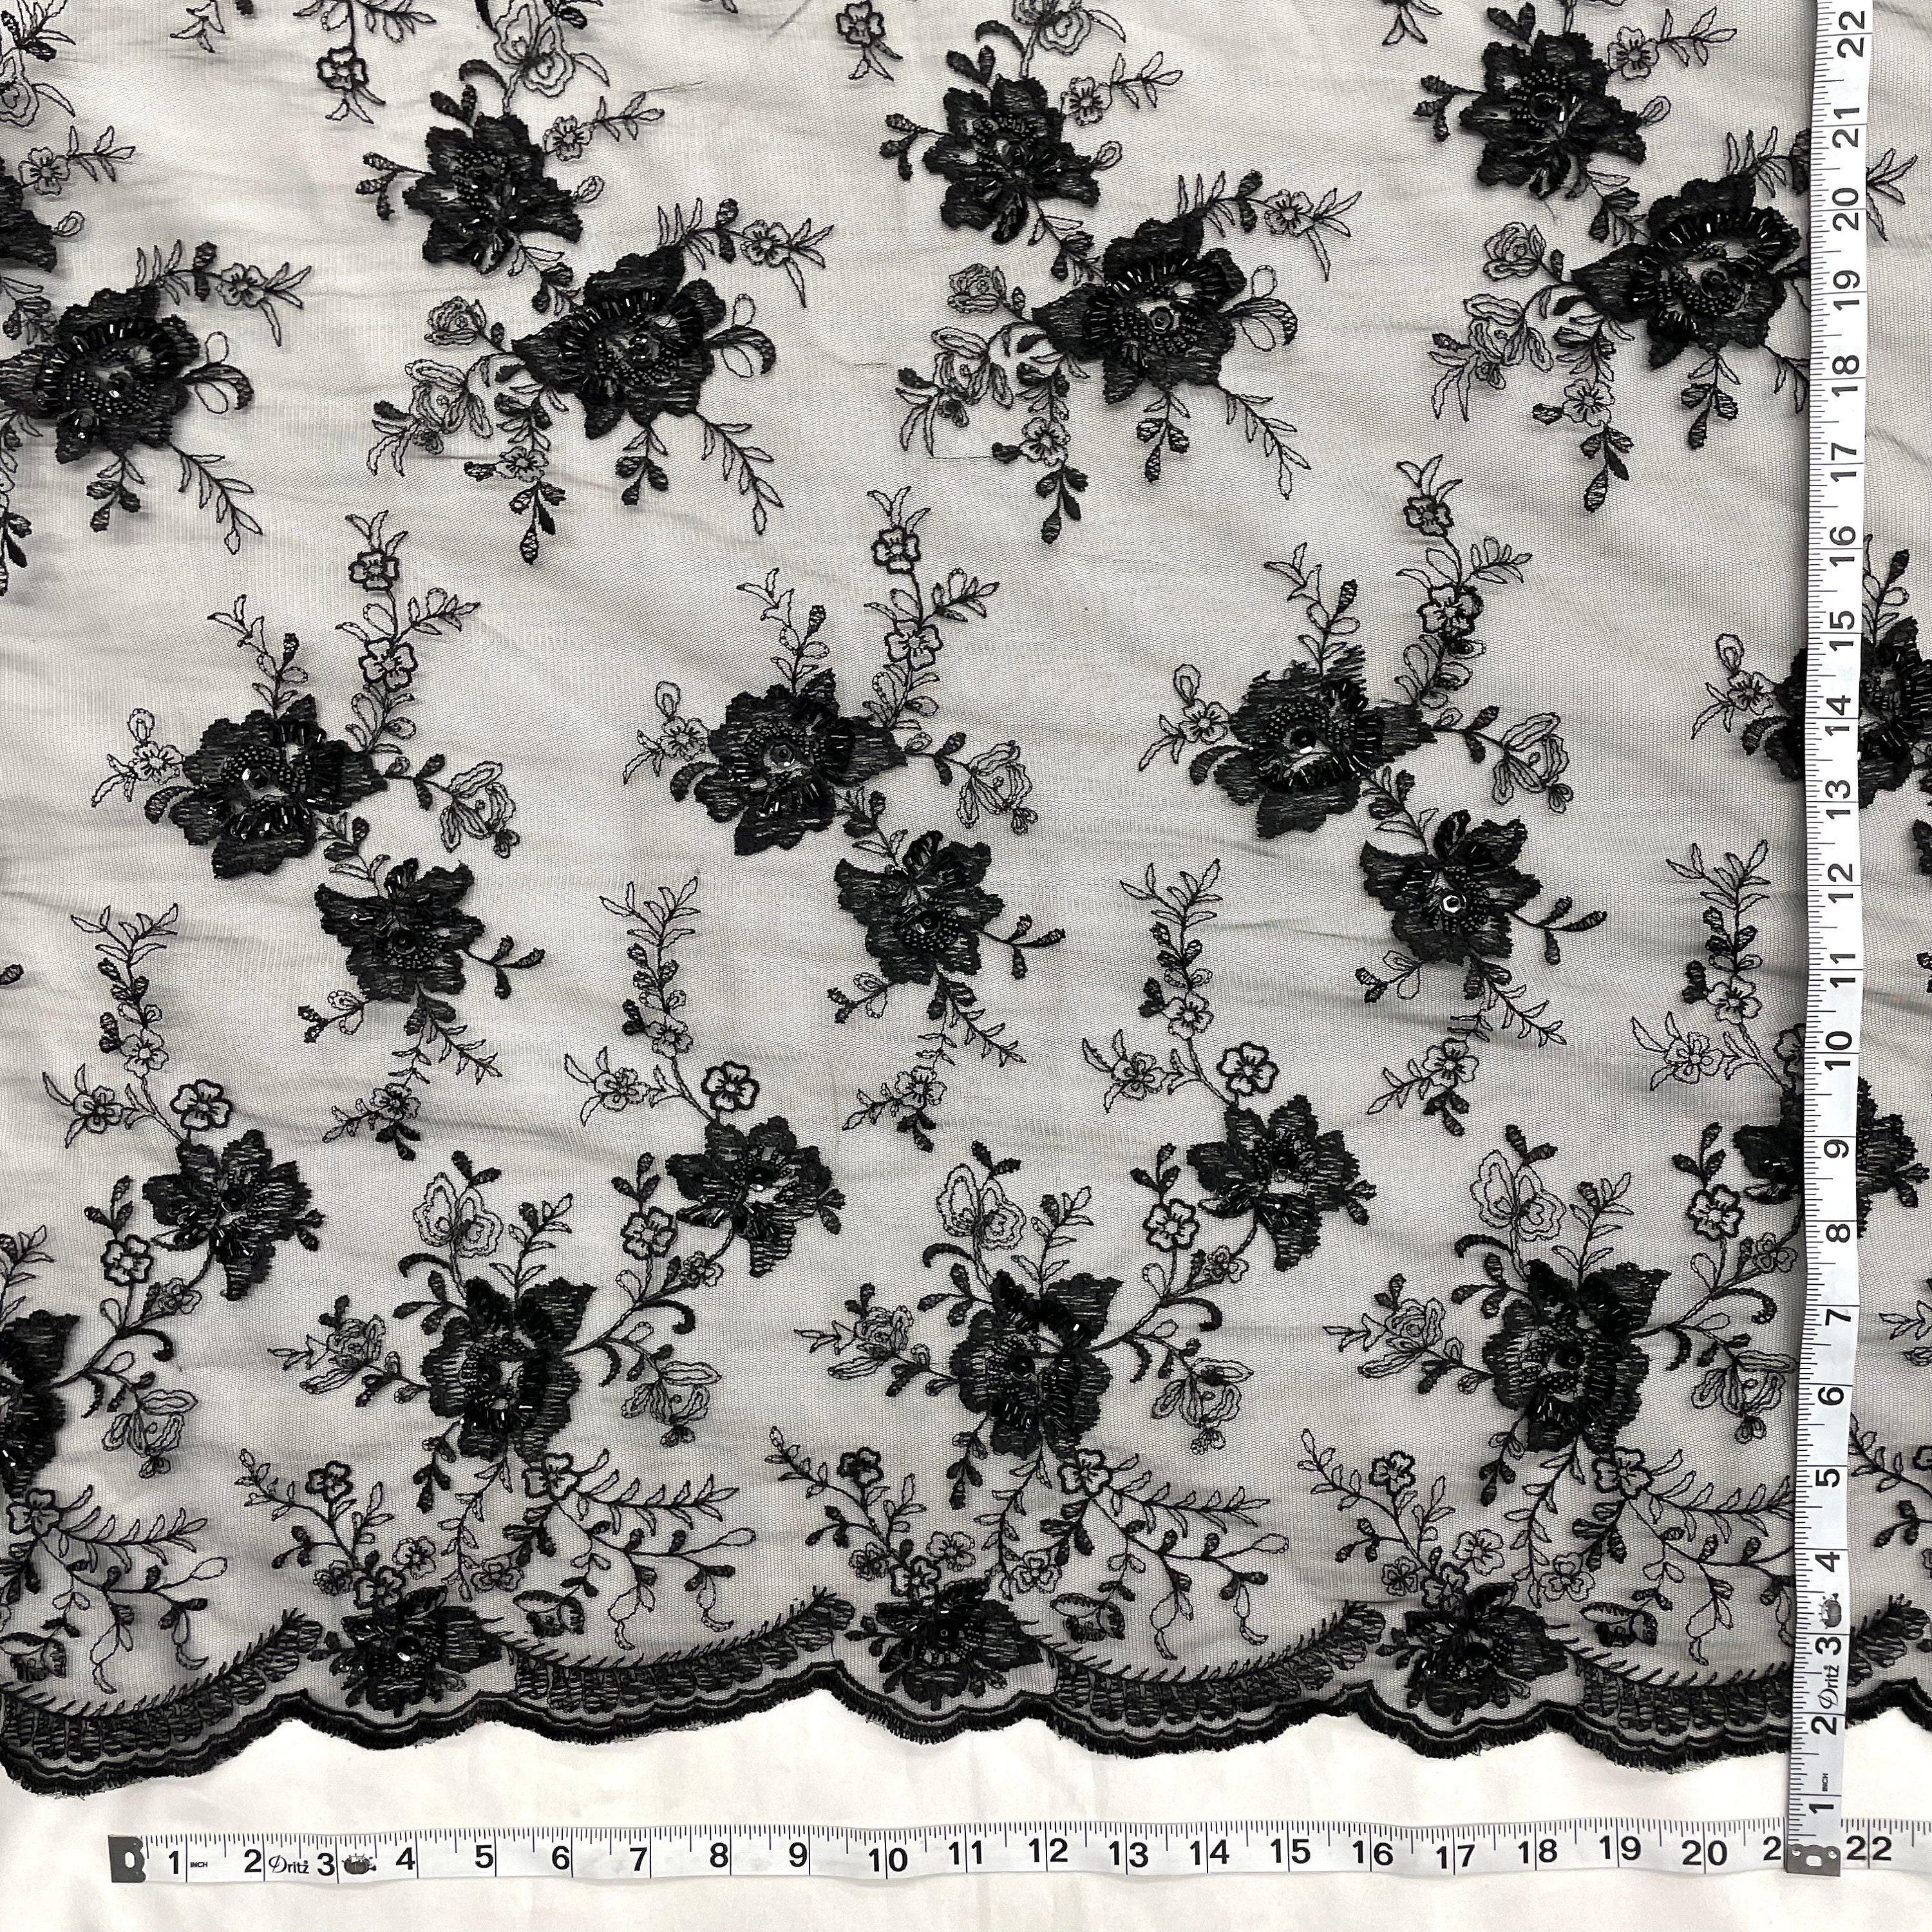 White English Netting Mesh Polyester Net Fabric By the Yard (WHITE-2237V-5N)